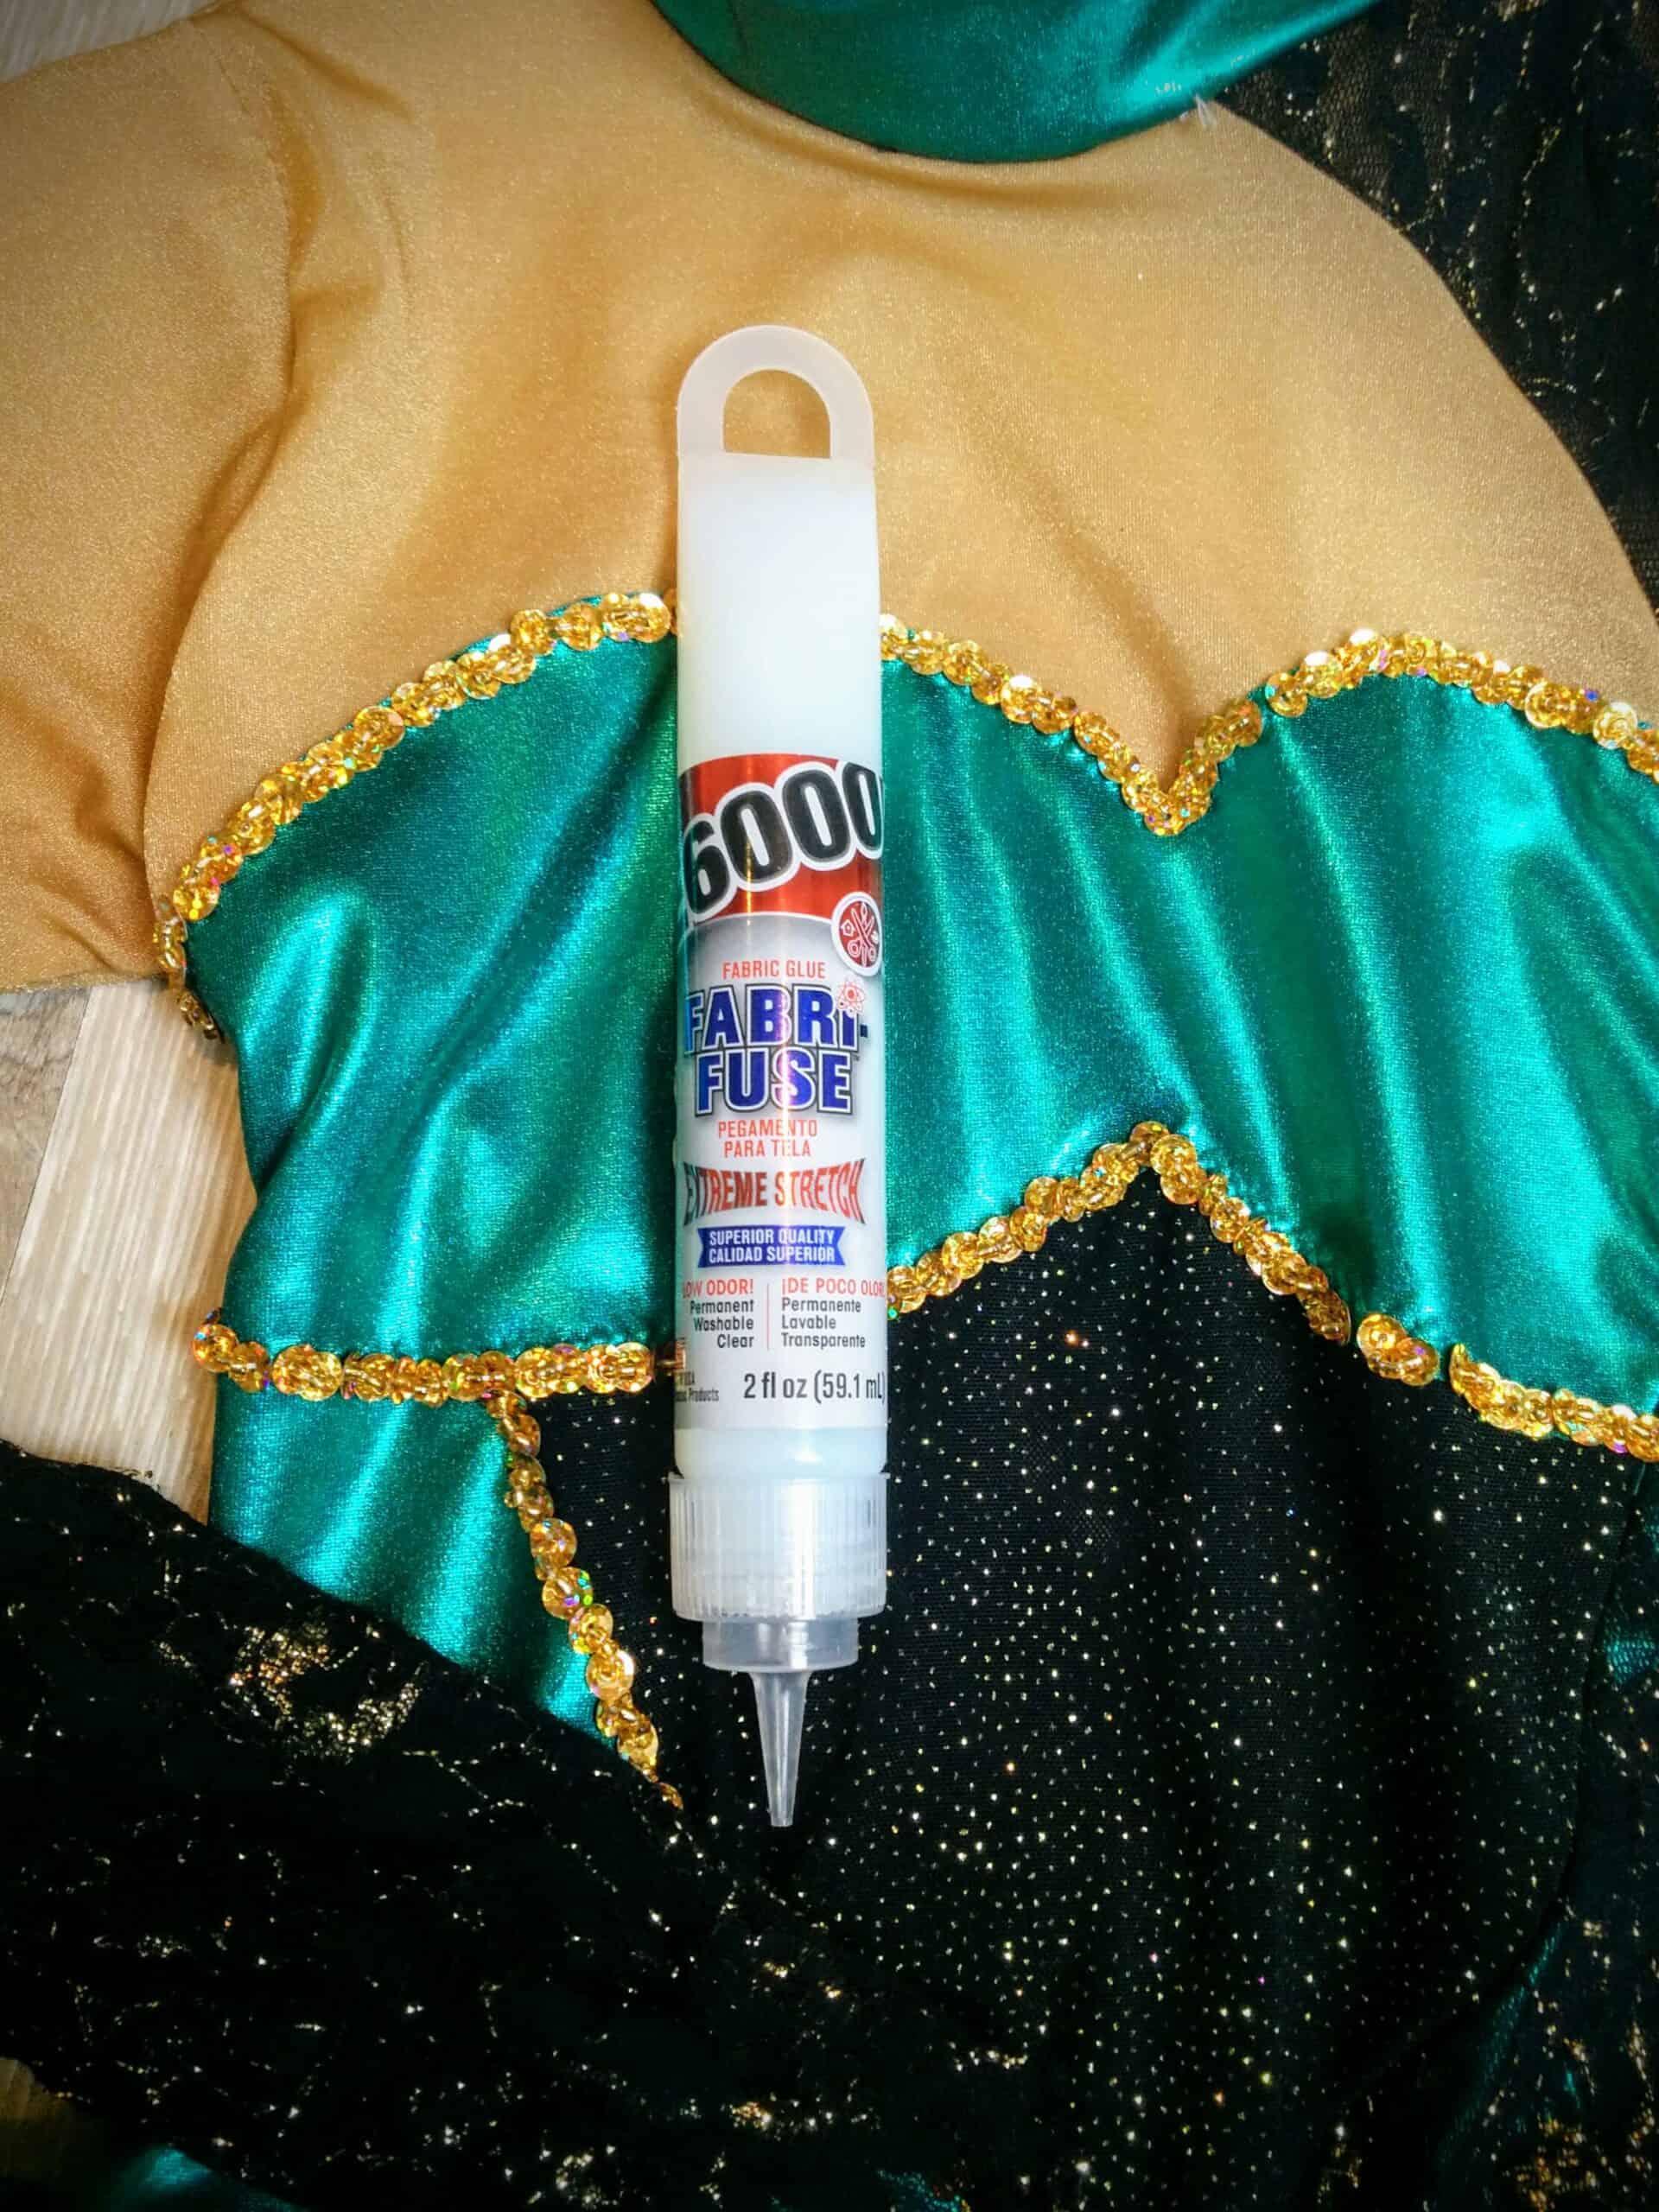 Is e6000 glue permanent